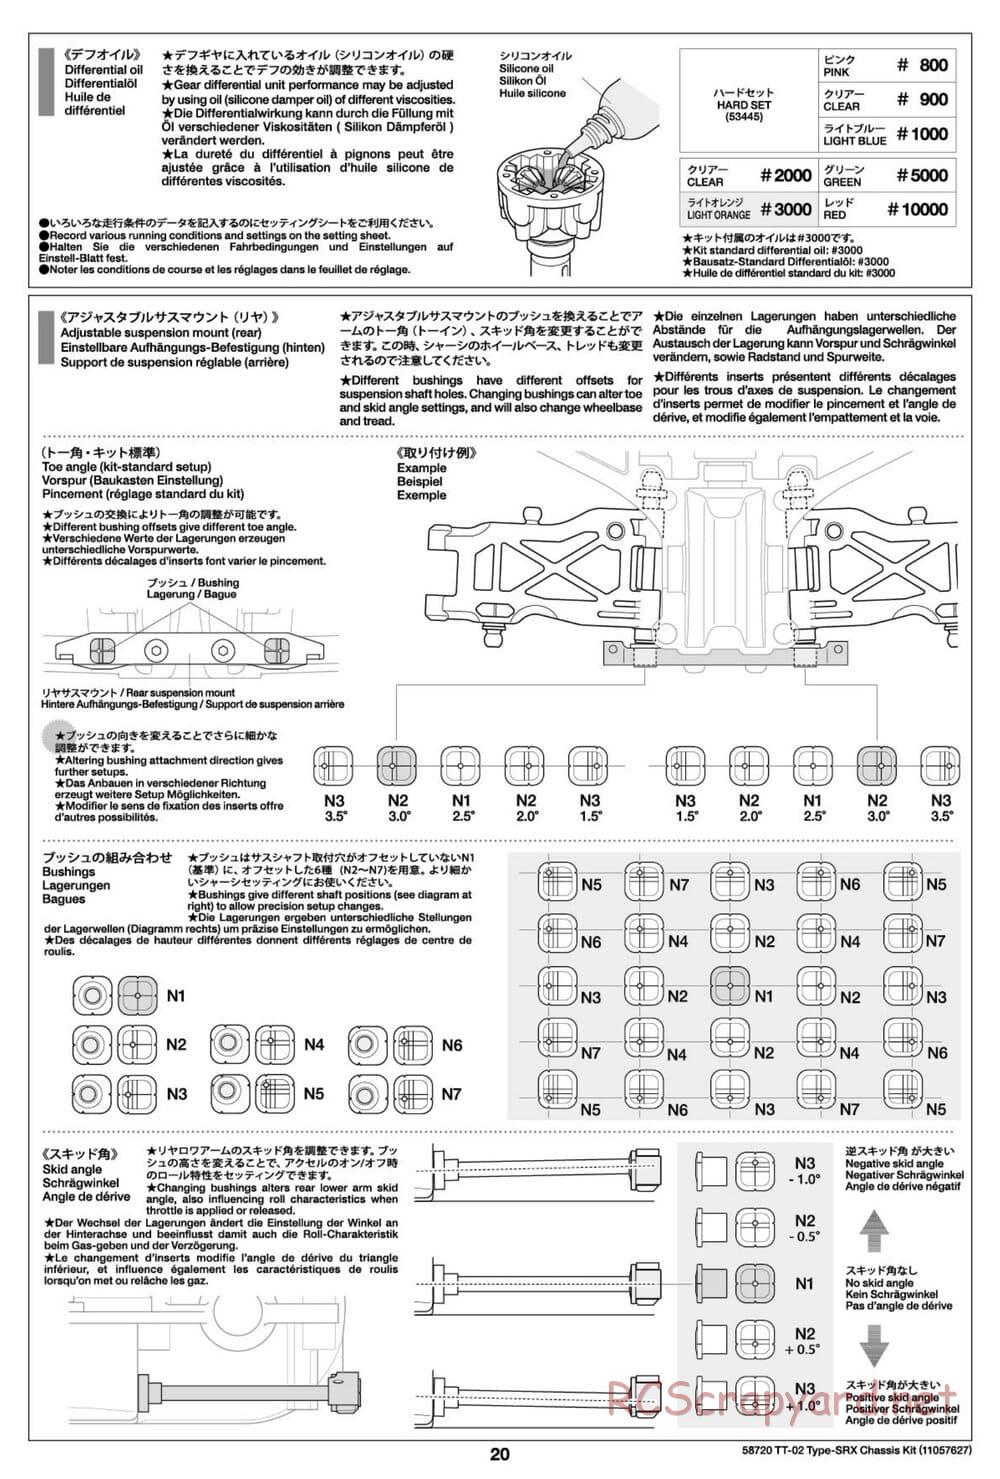 Tamiya - TT-02 Type-SRX Chassis - Manual - Page 20